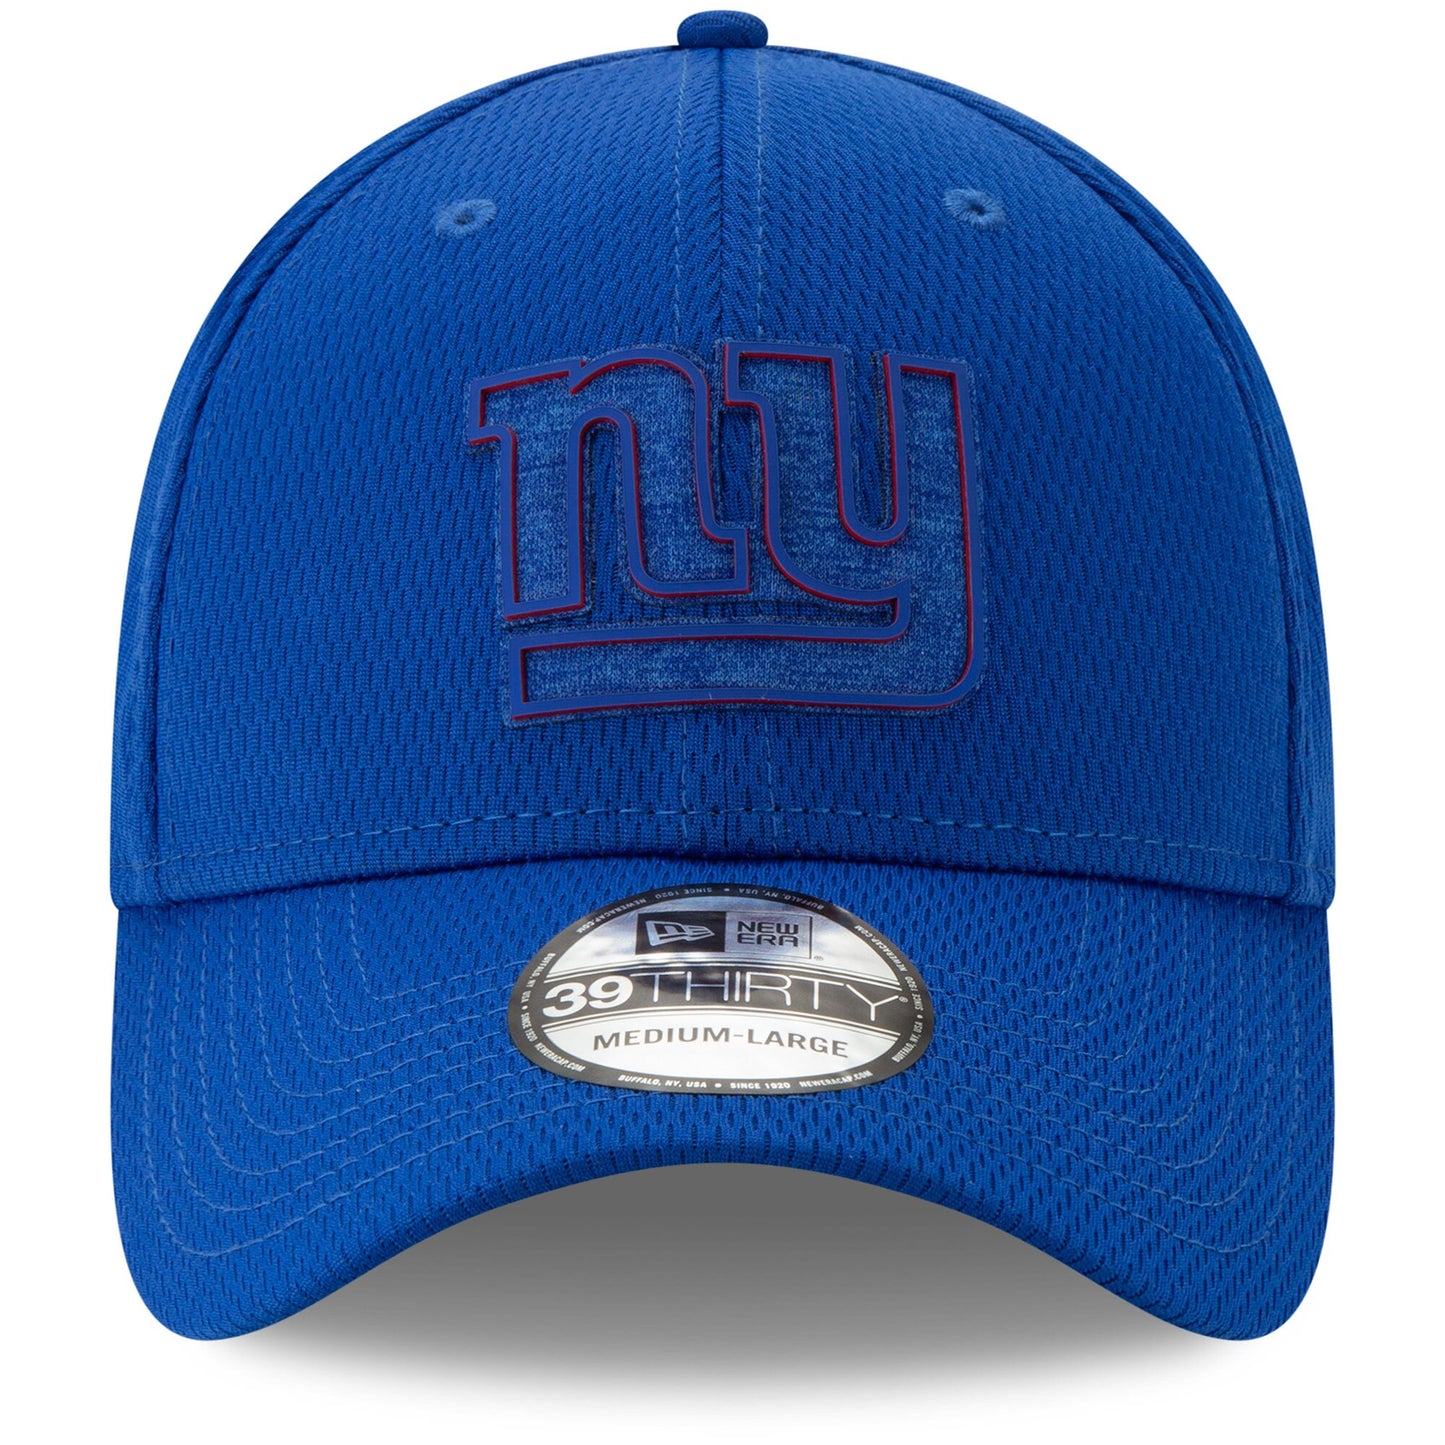 New York Giants New Era Blue 2T Mold 39THIRTY Hat